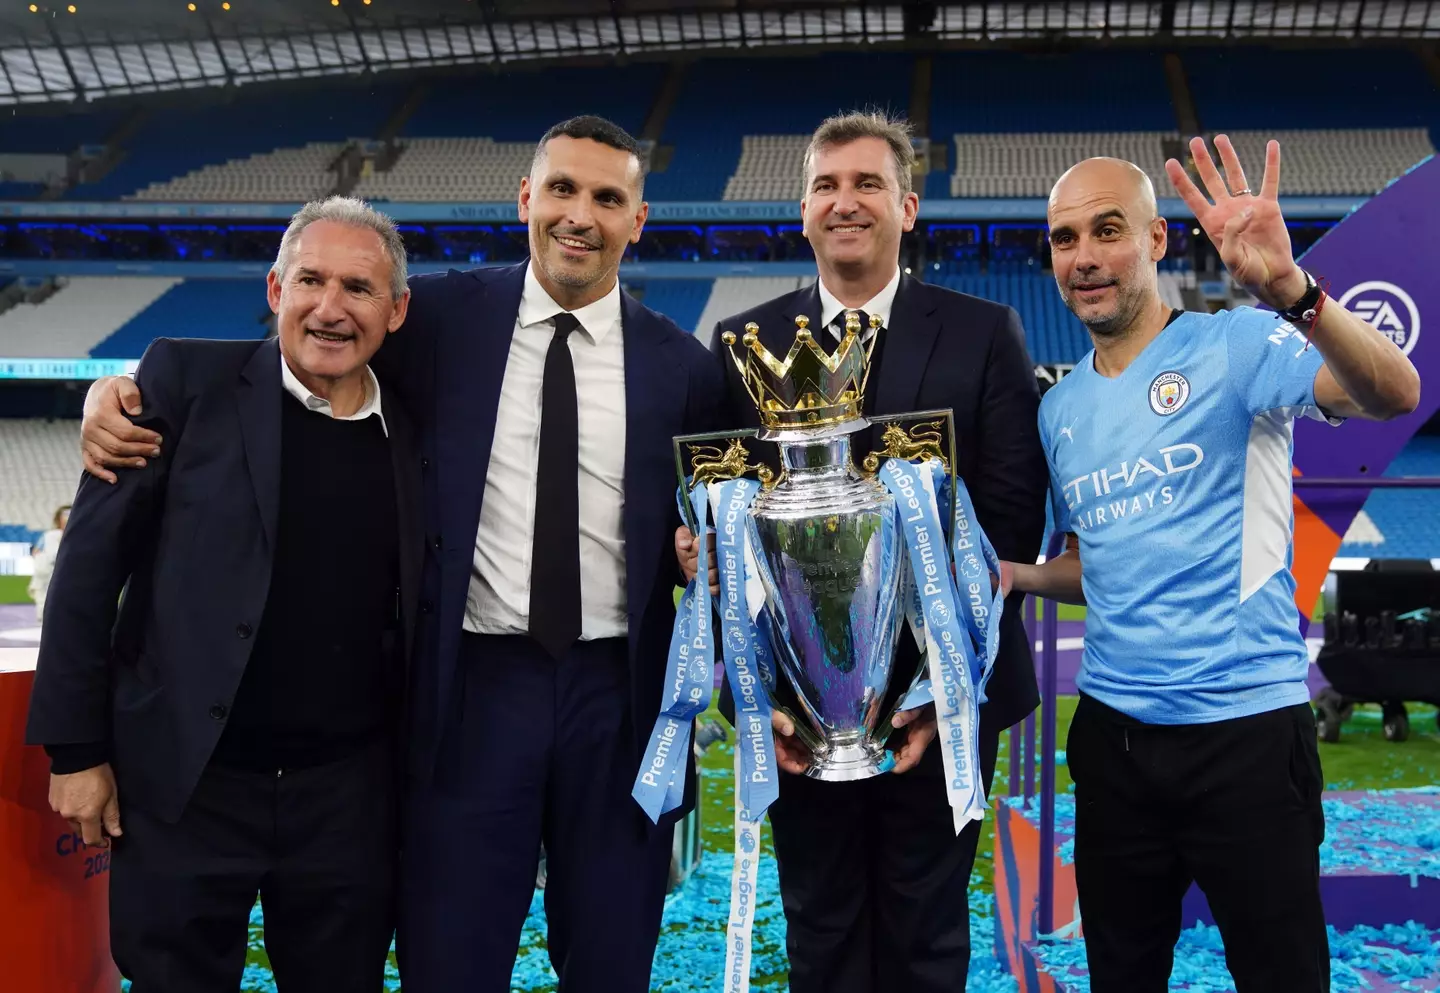 Pep Guardiola with Man City chiefs following their Premier League triumph. Image: Alamy